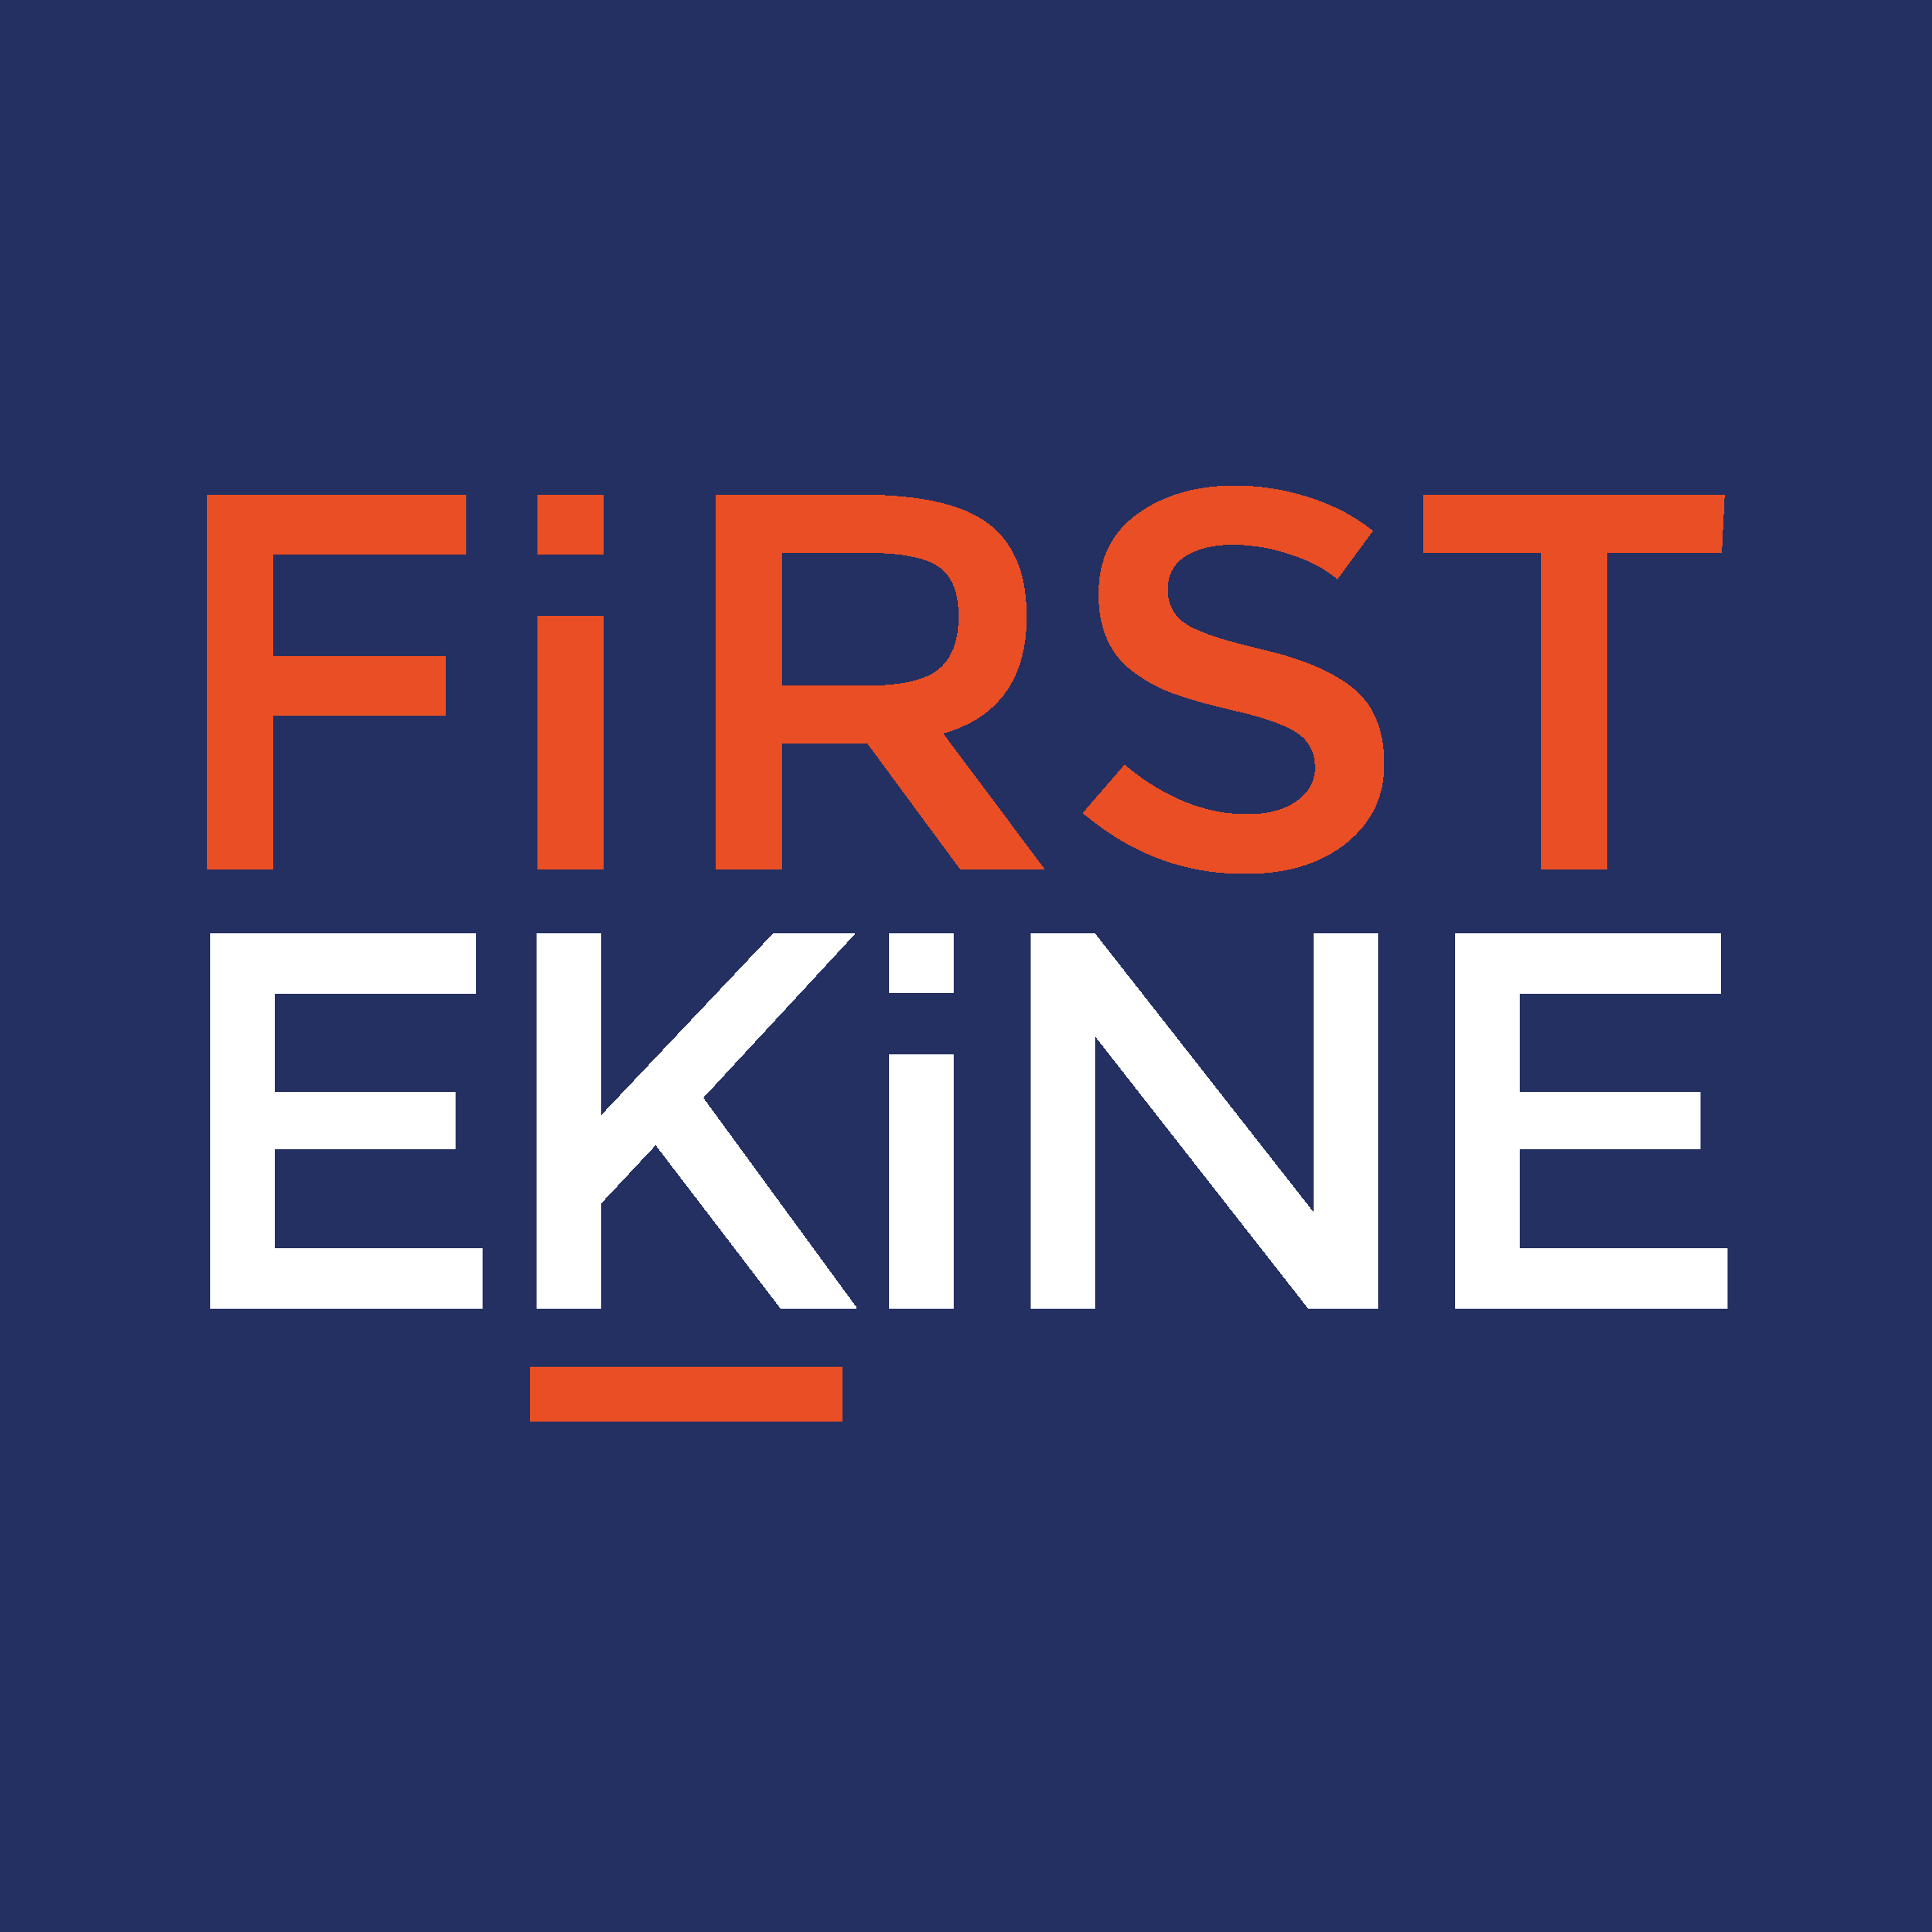 First Ekine